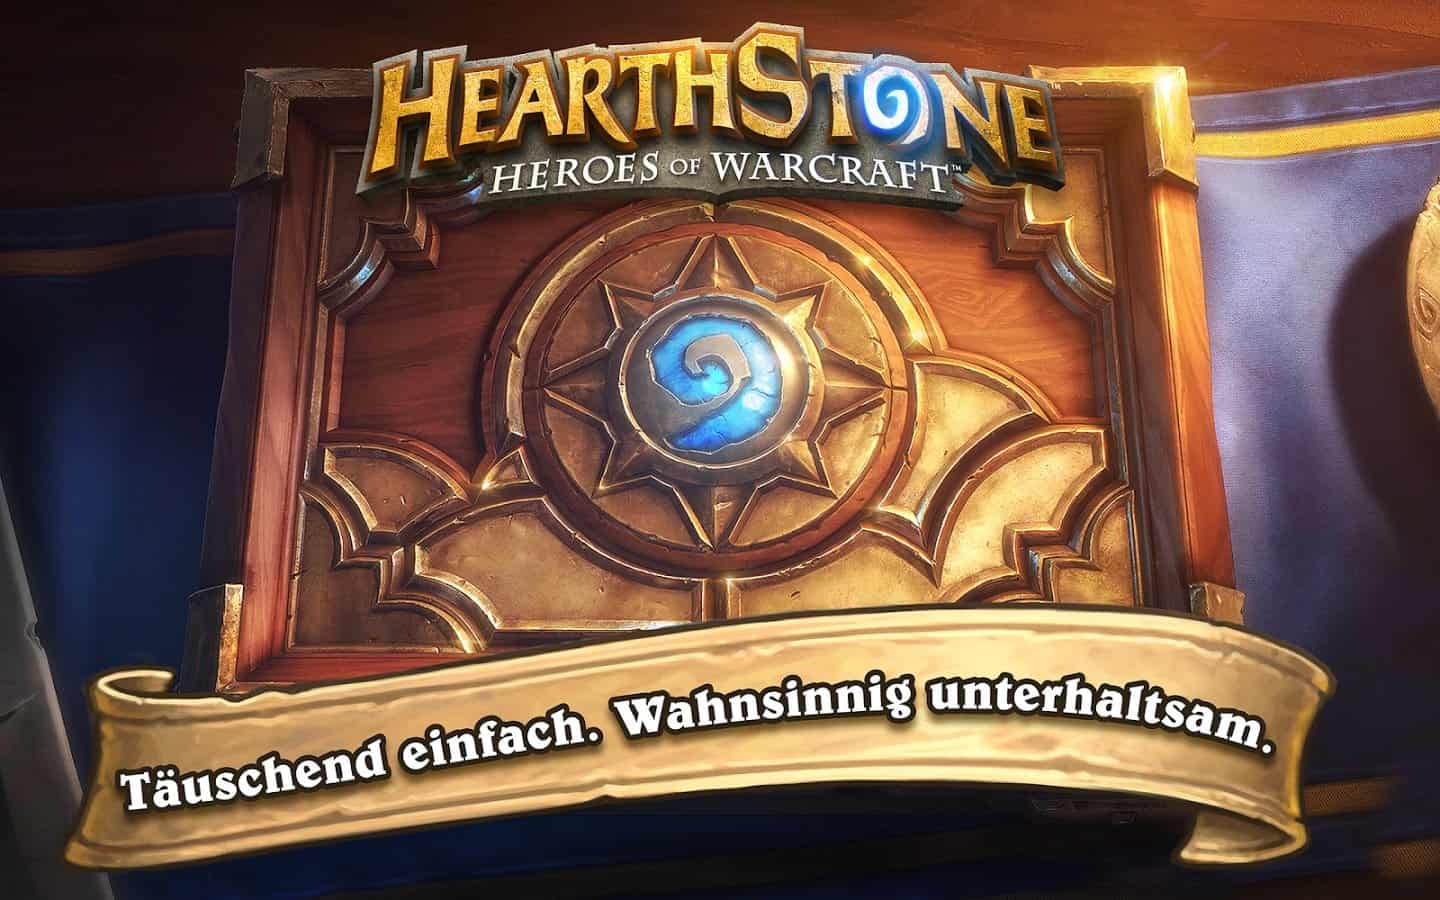 Hearthstone - Heroes of Warcraft